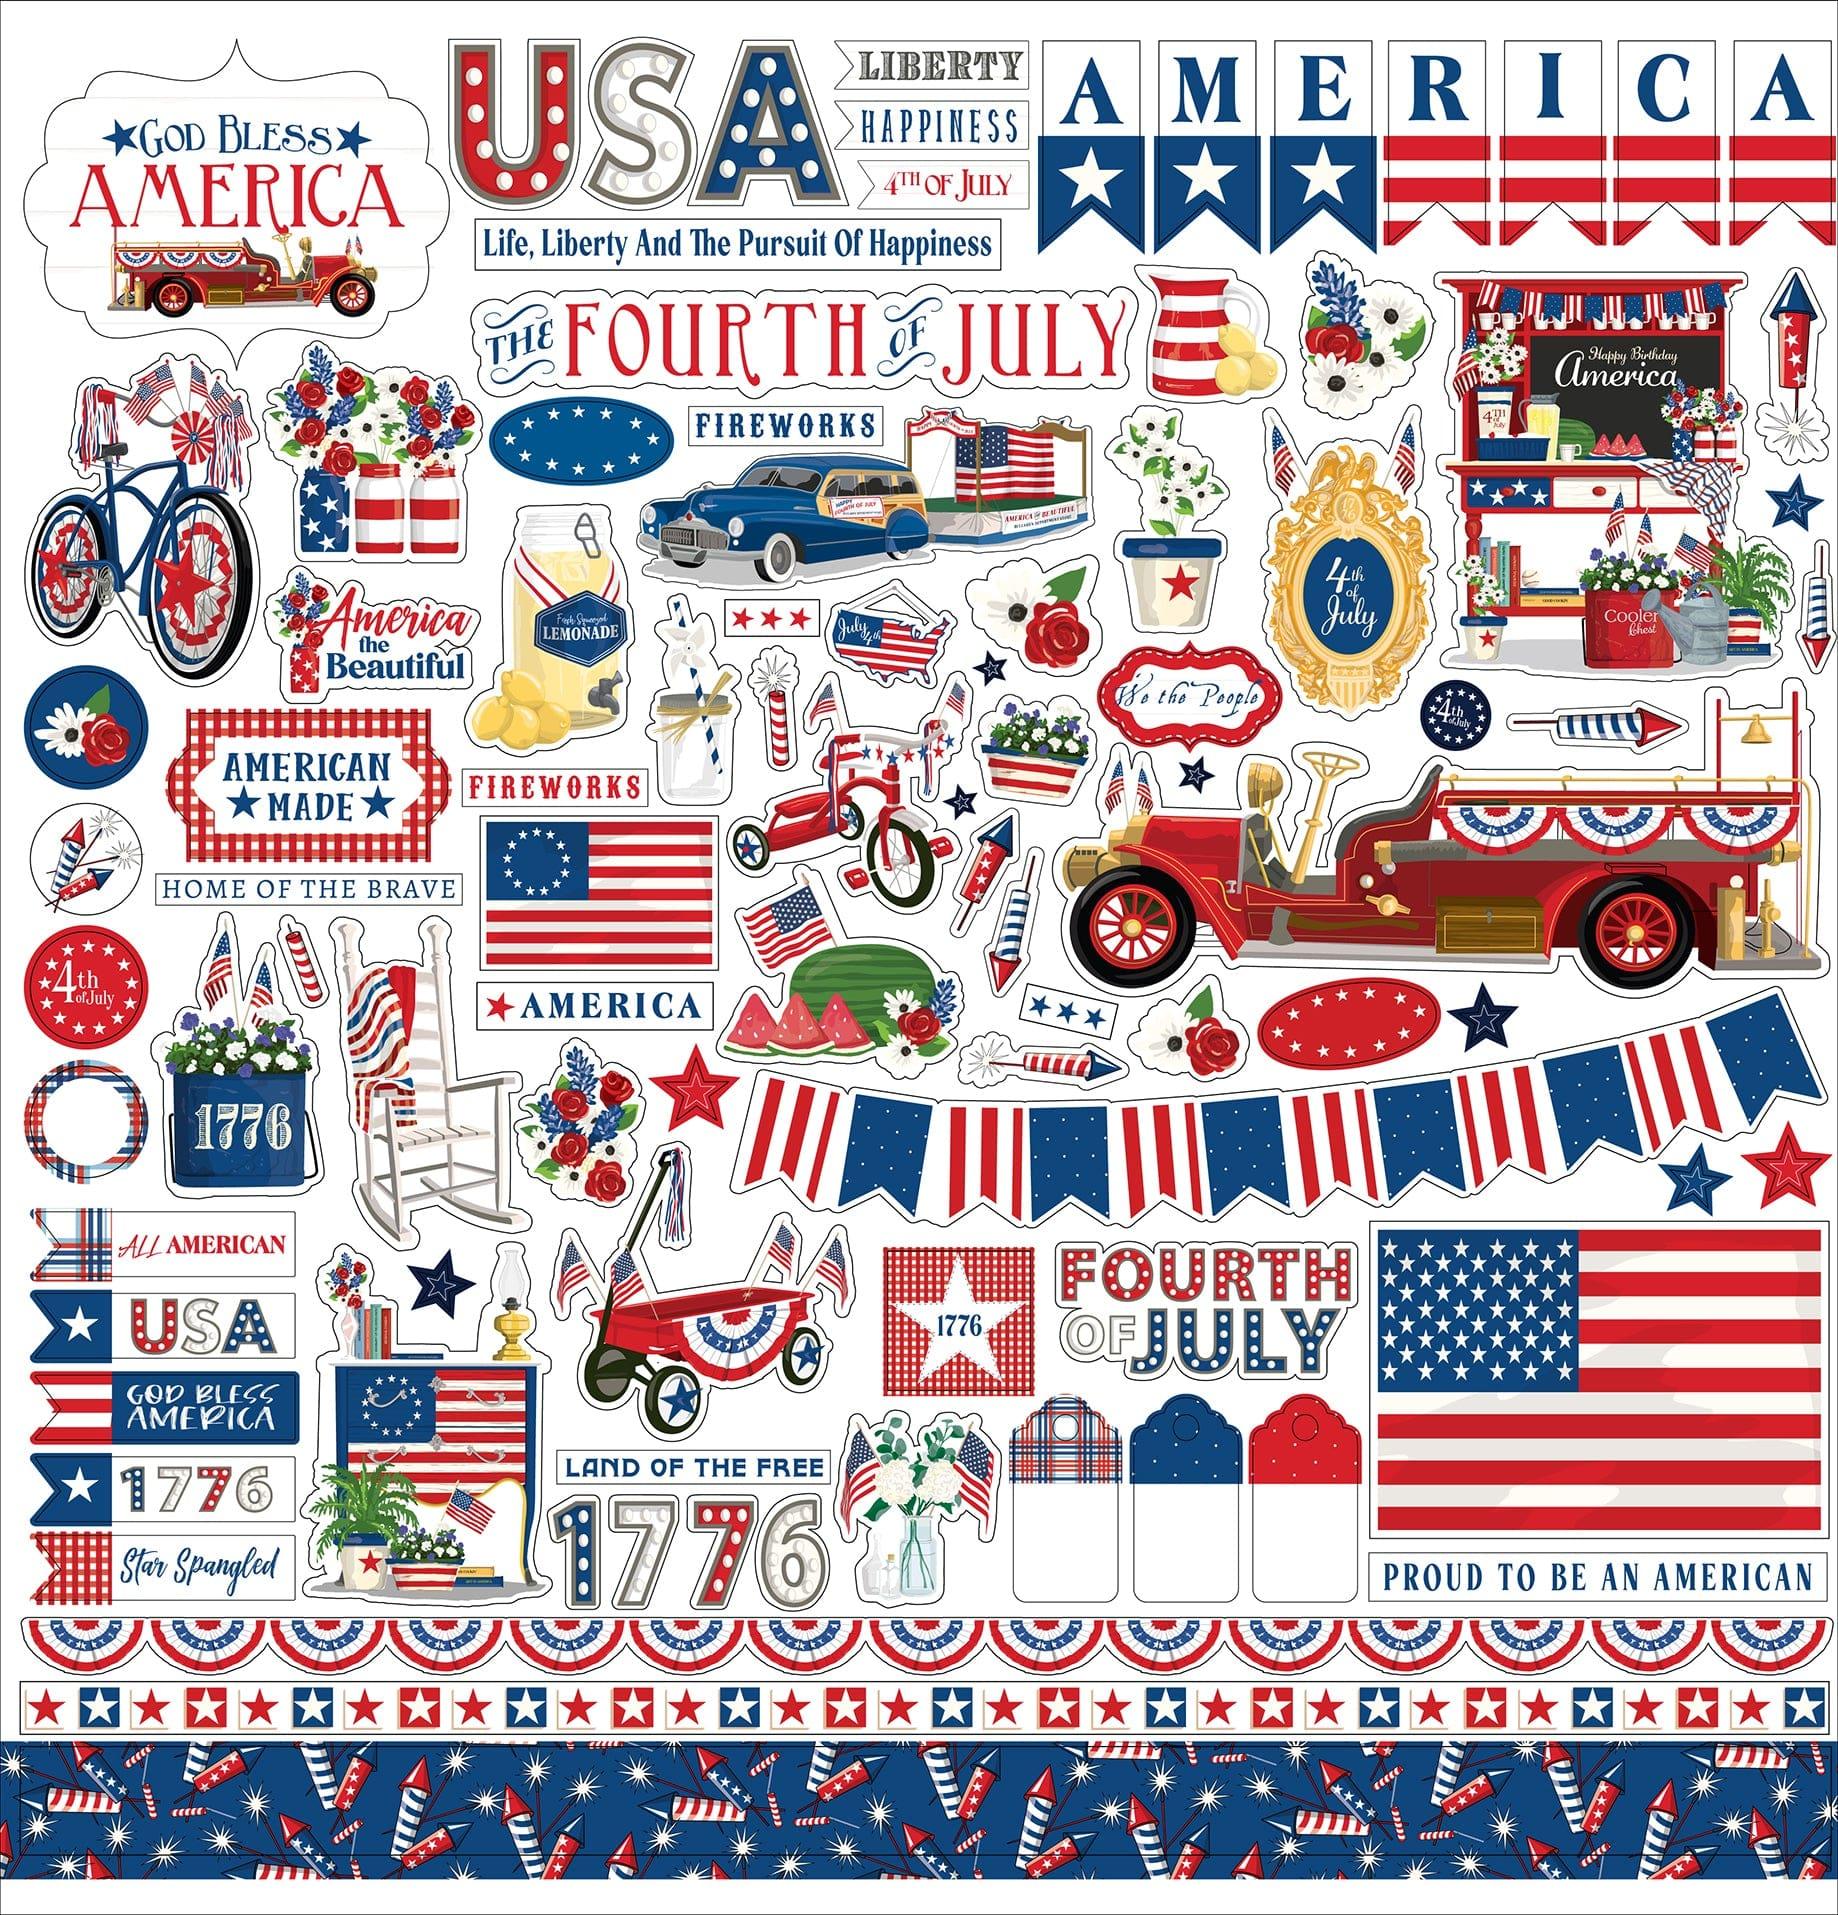 God Bless America Collection 12 x 12 Scrapbook Sticker Sheet by Carta Bella - Scrapbook Supply Companies